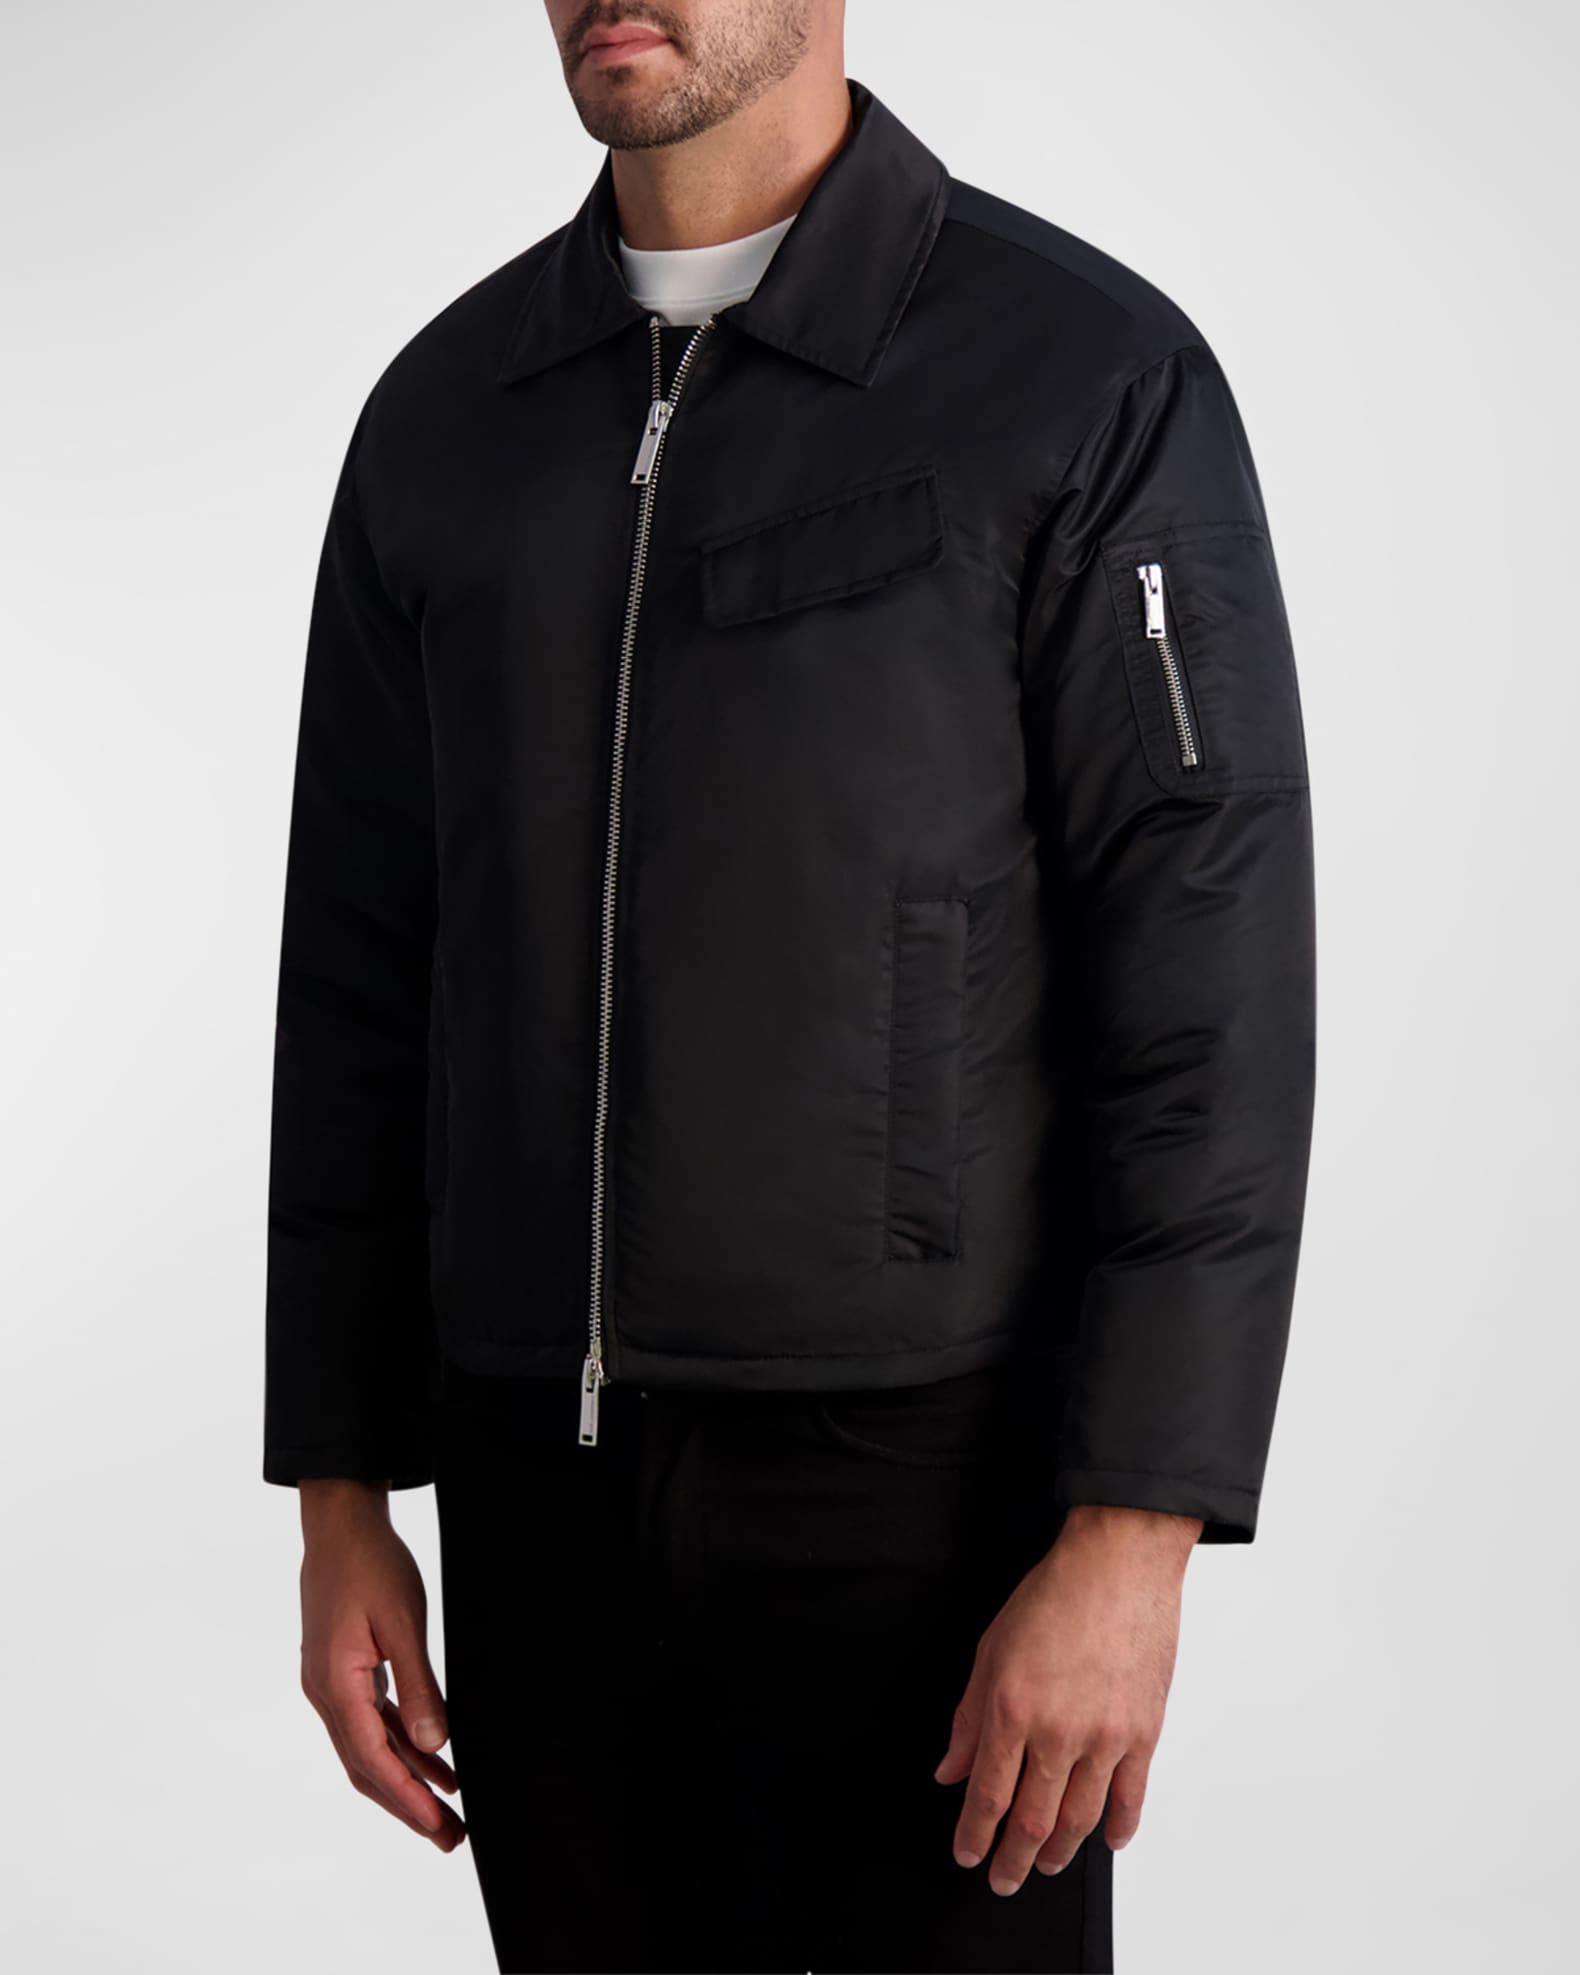 Vince Men's Down-filled Leather Puffer Jacket in Black for Men